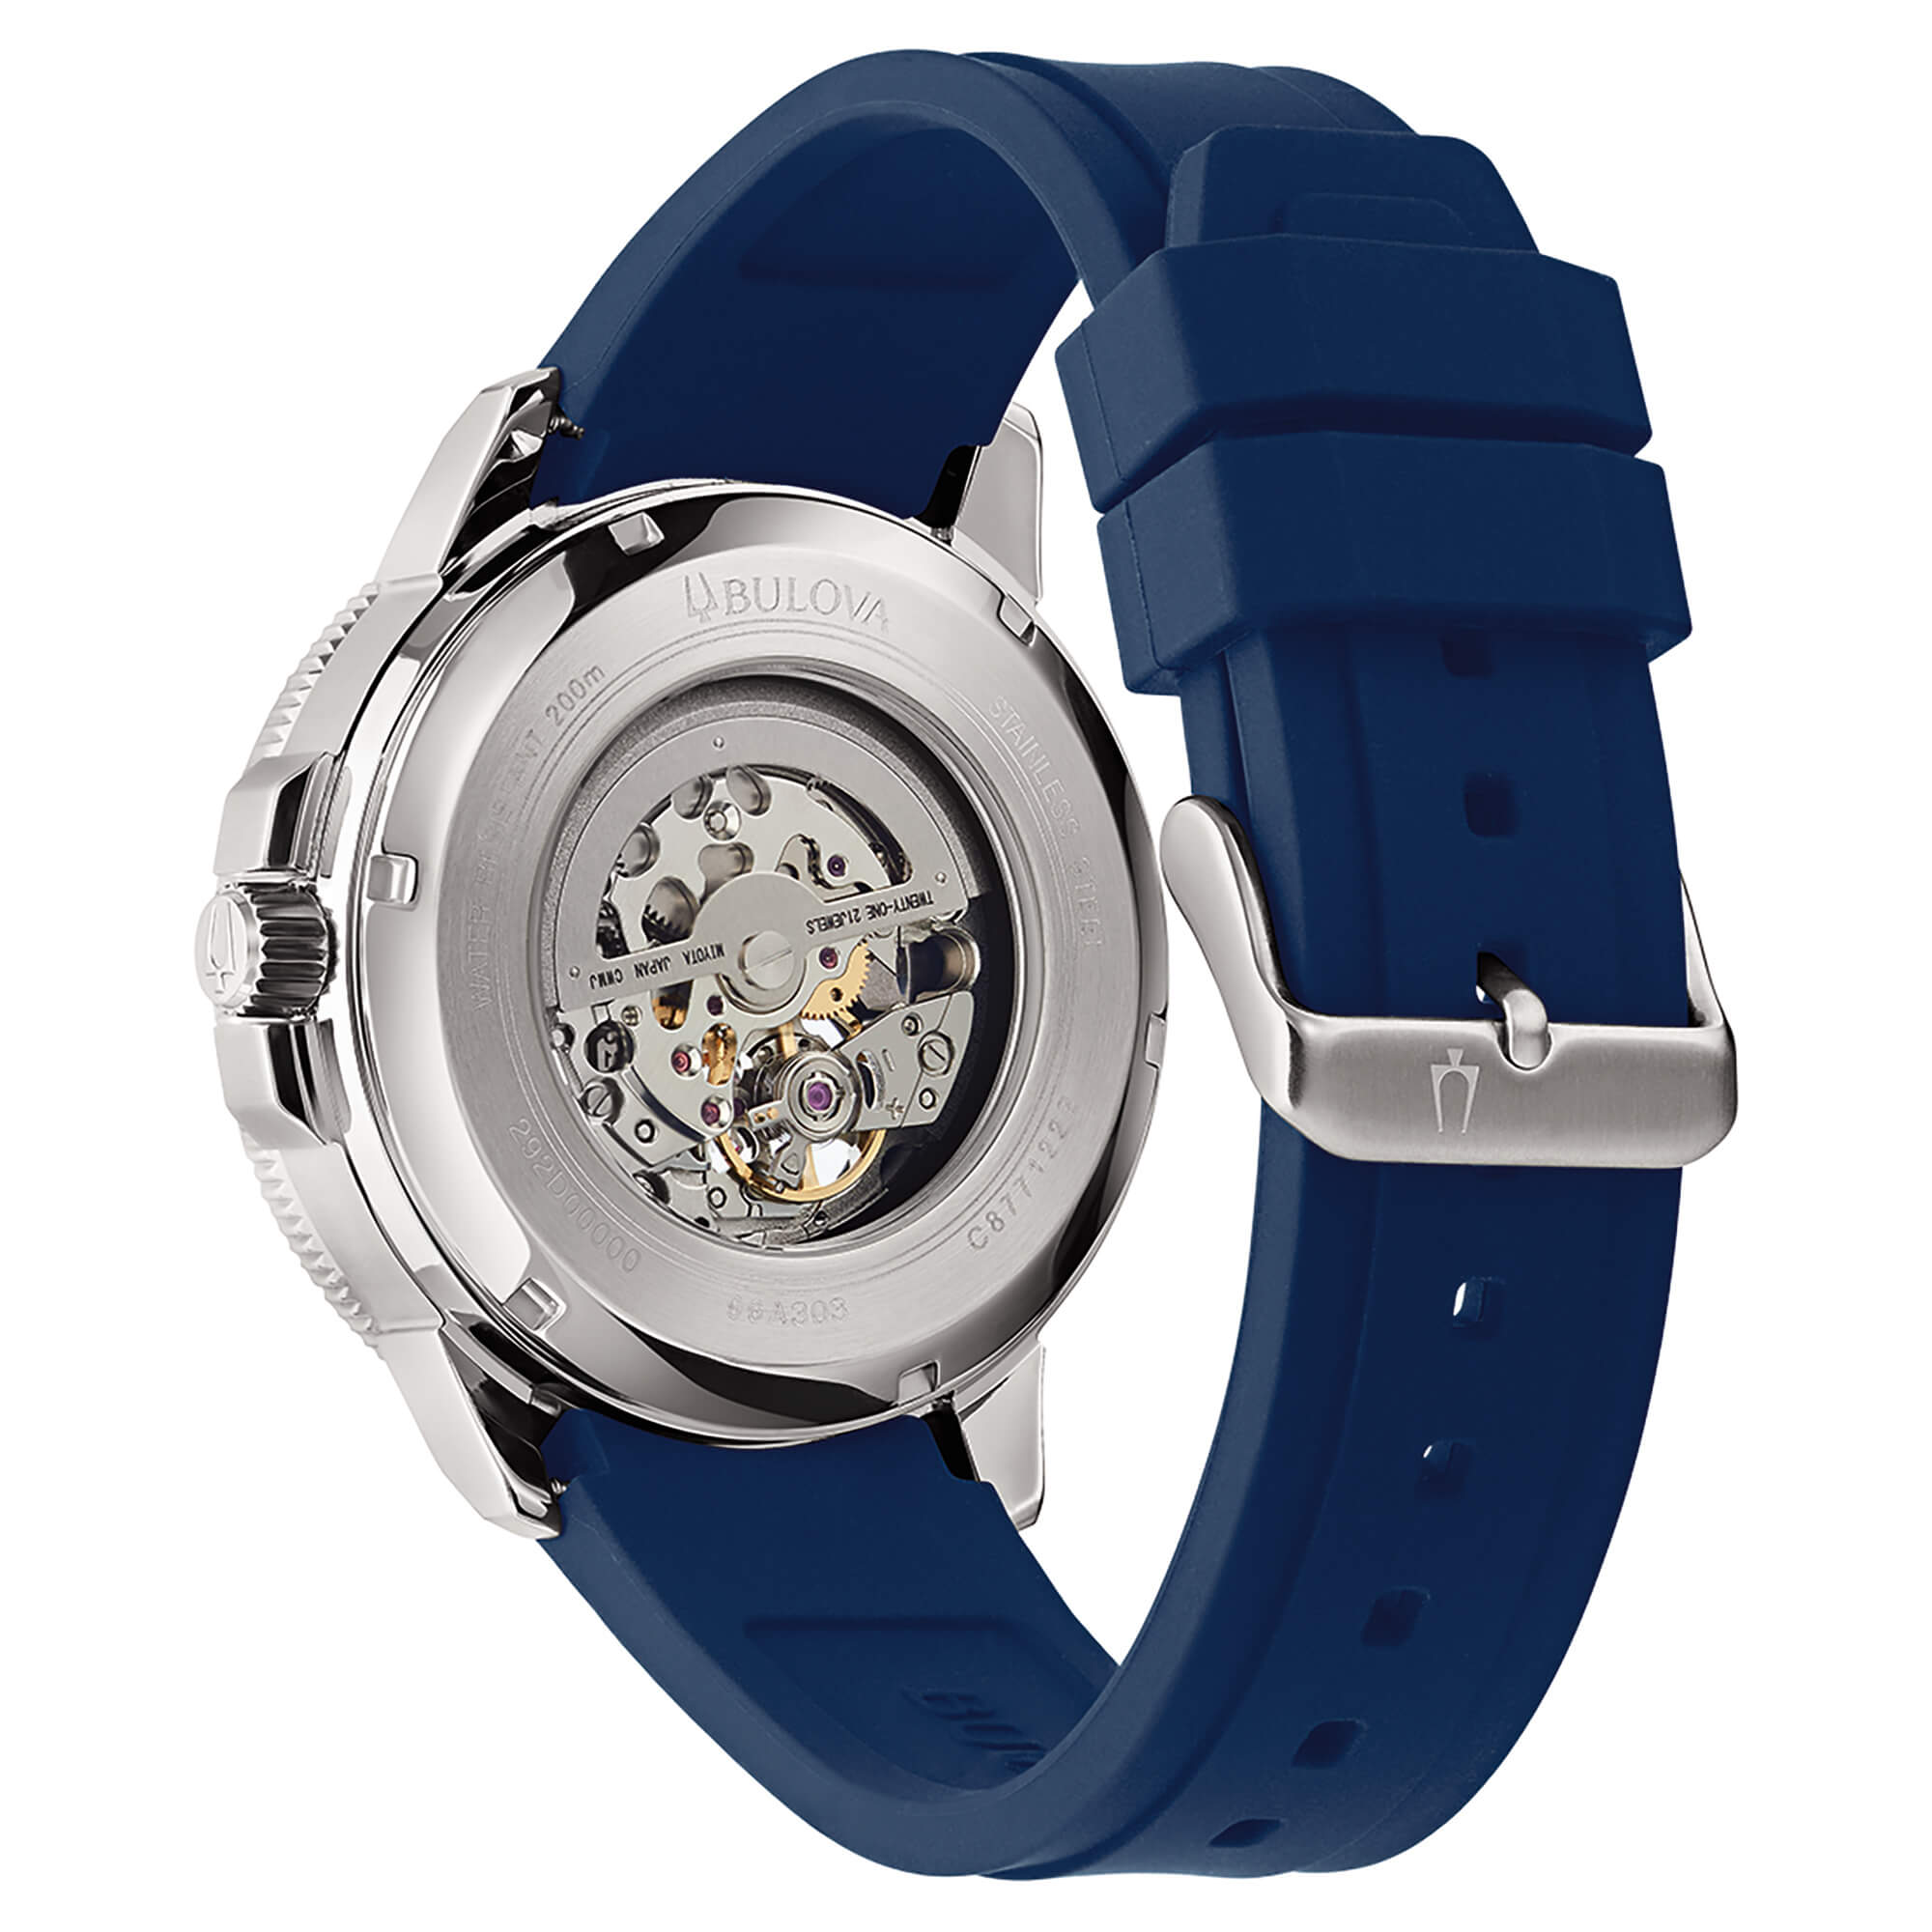 ACwO FwIT Sx Best Bluetooth Calling Branded Smart Watch | 120+ Sports Mode  | 200+ Watch Faces